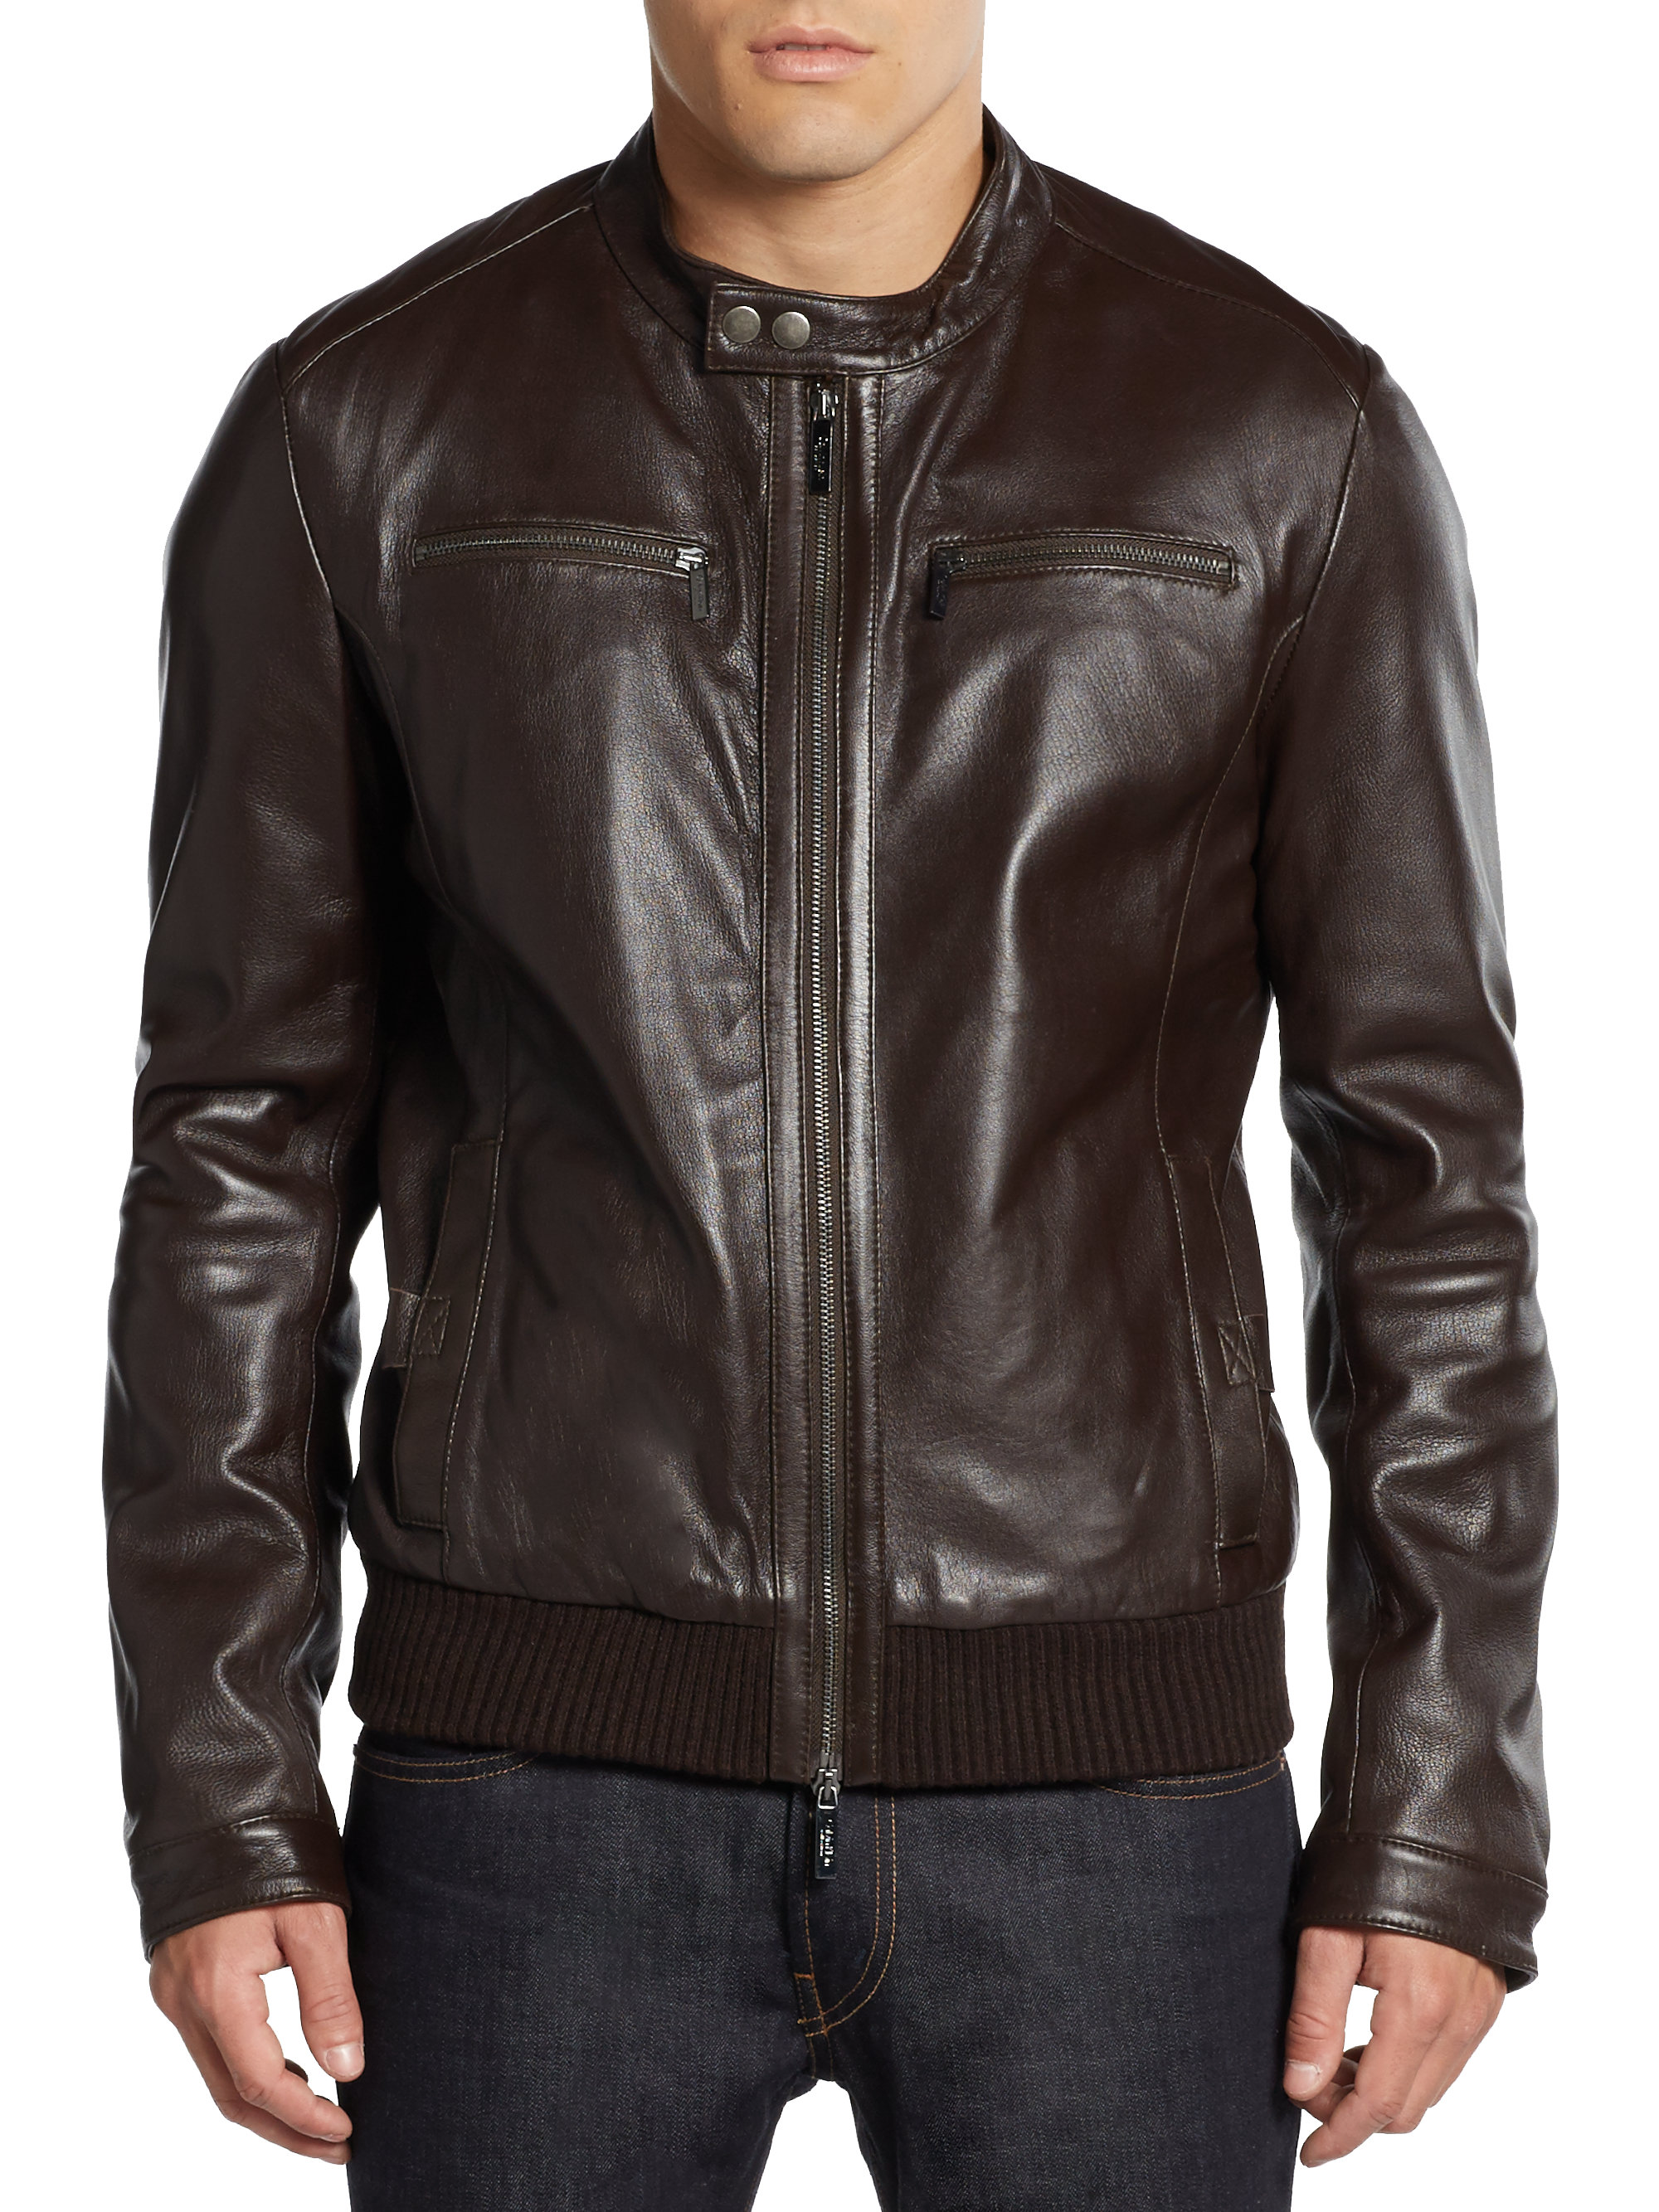 Lyst - Calvin klein Basar Leather Biker Jacket in Brown for Men